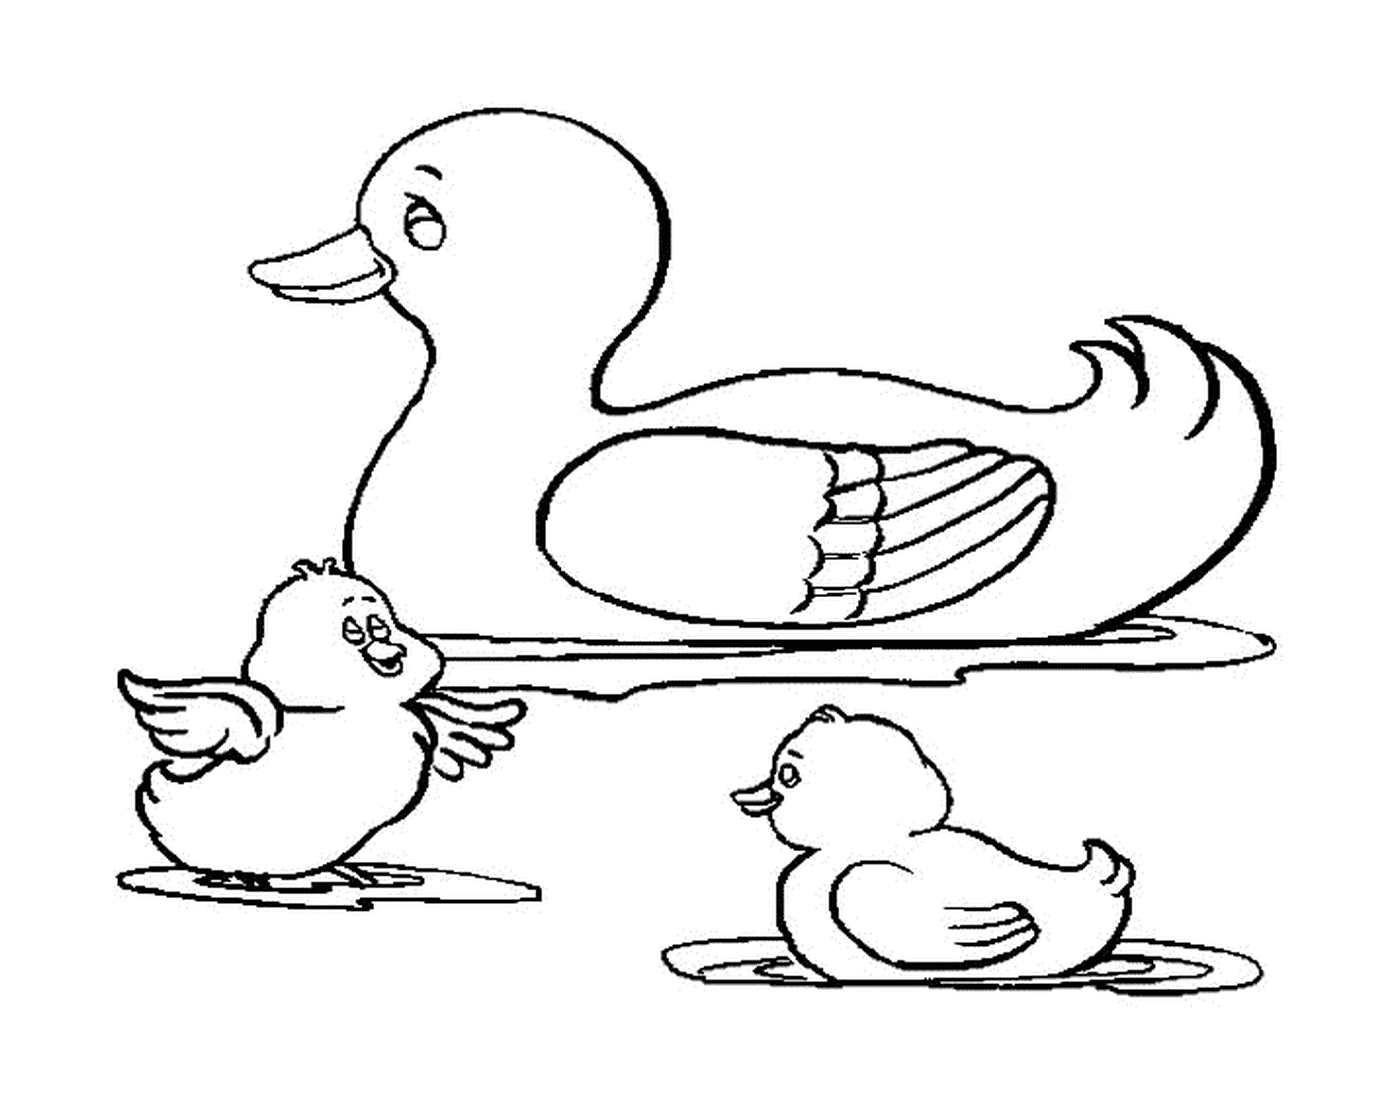  Un pato con dos patitos 